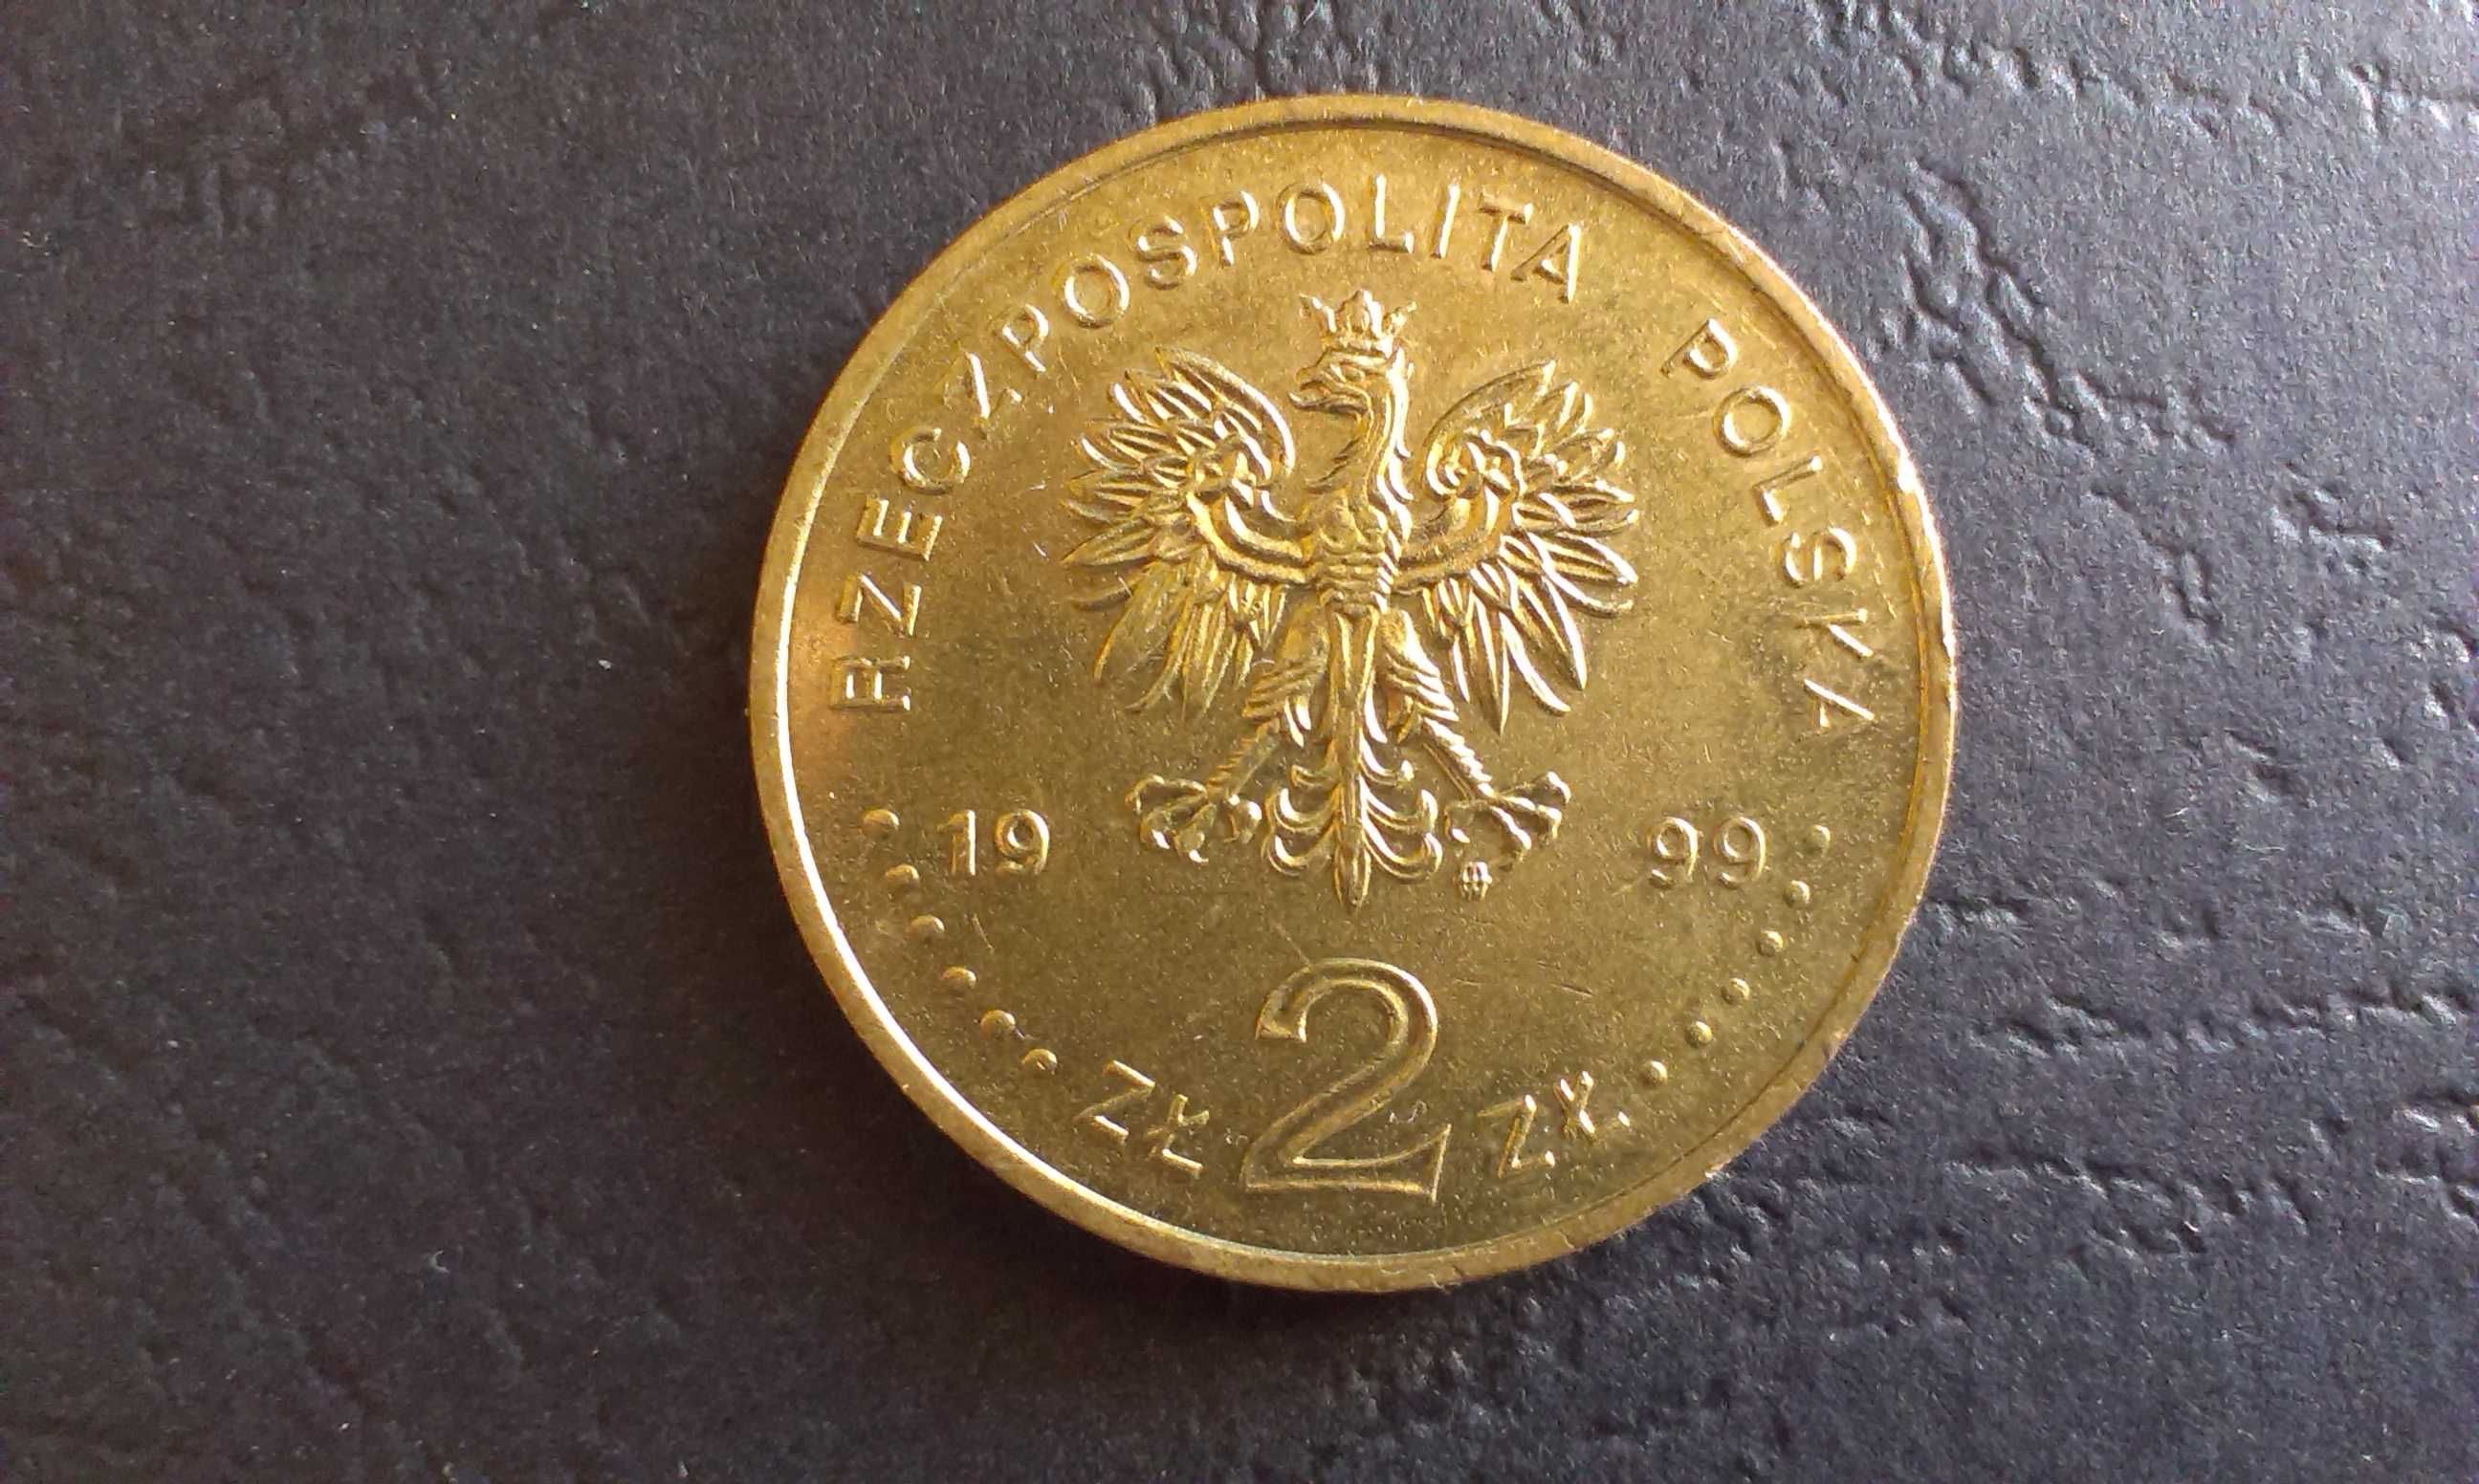 Moneta 2 złote 1999 Ernest Malinowski.